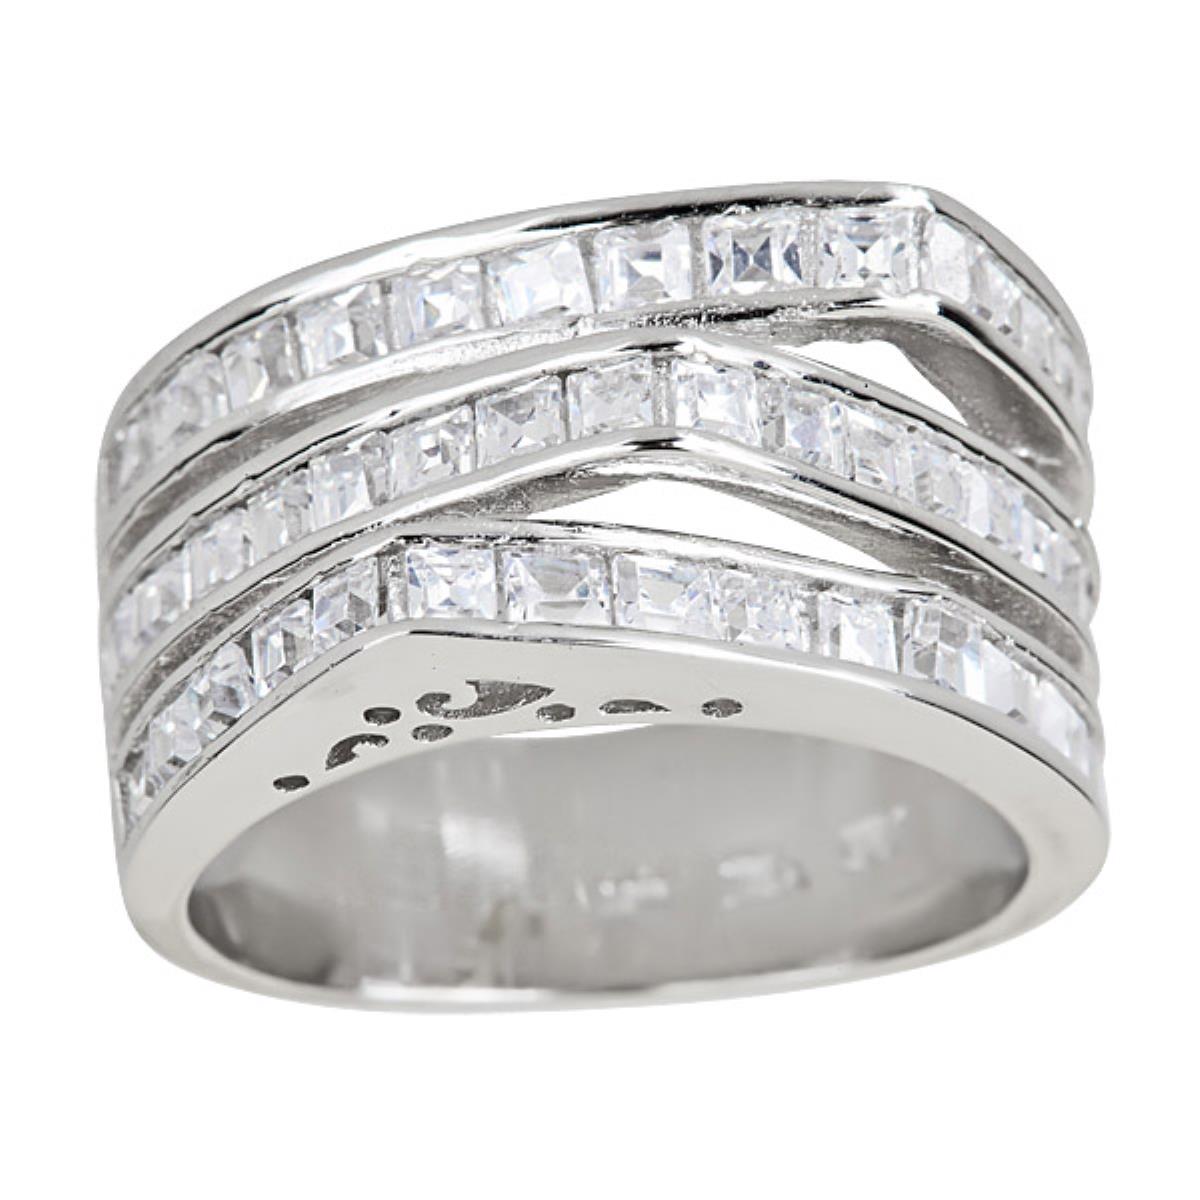 Sterling Silver Princess Cut Fashion Ring